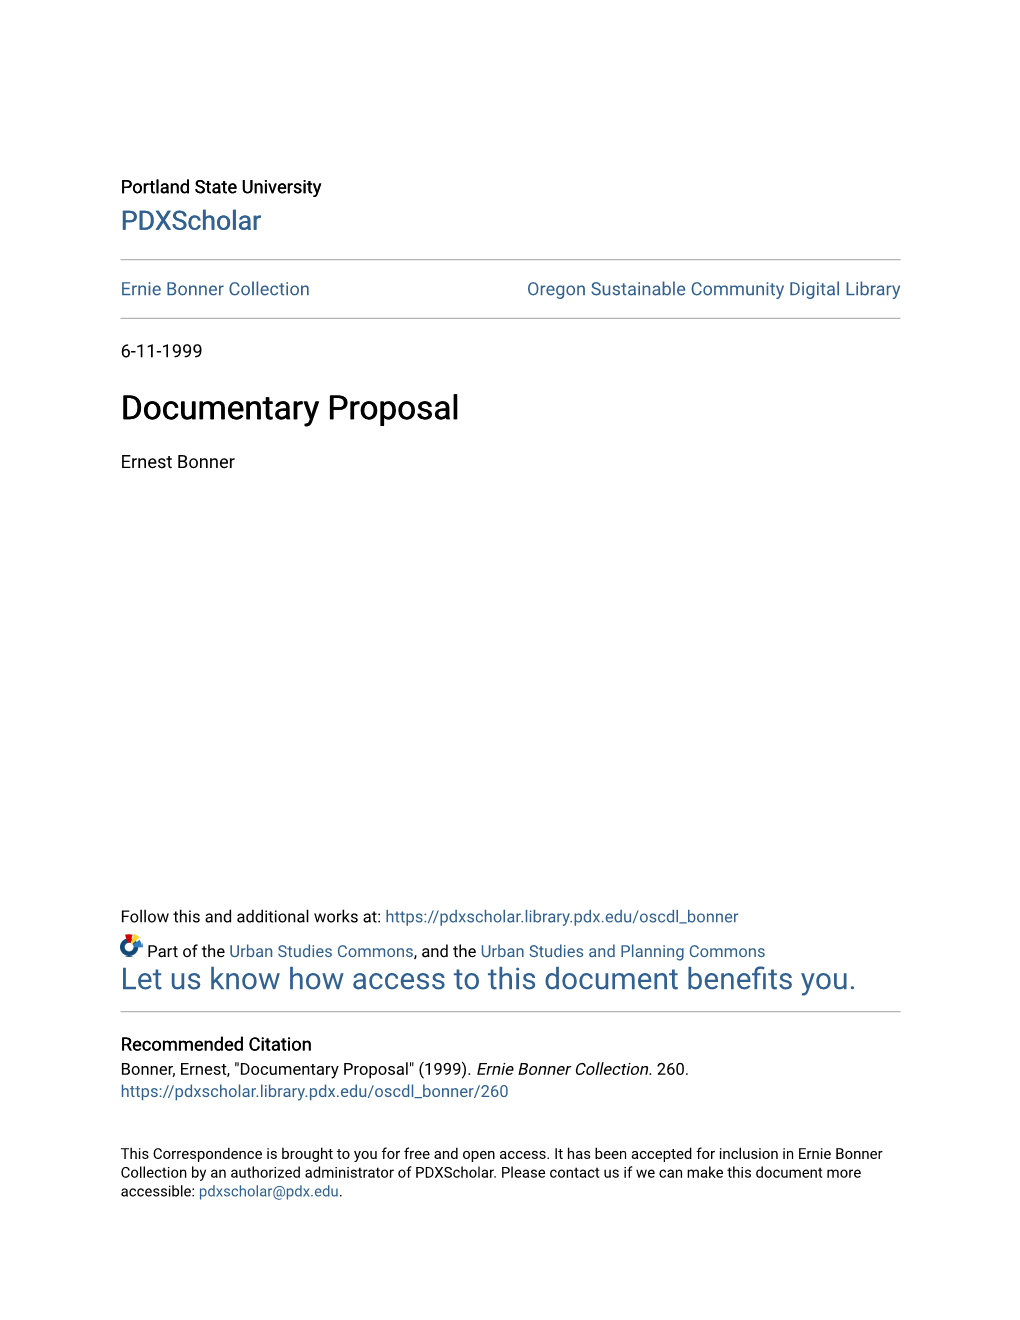 Documentary Proposal